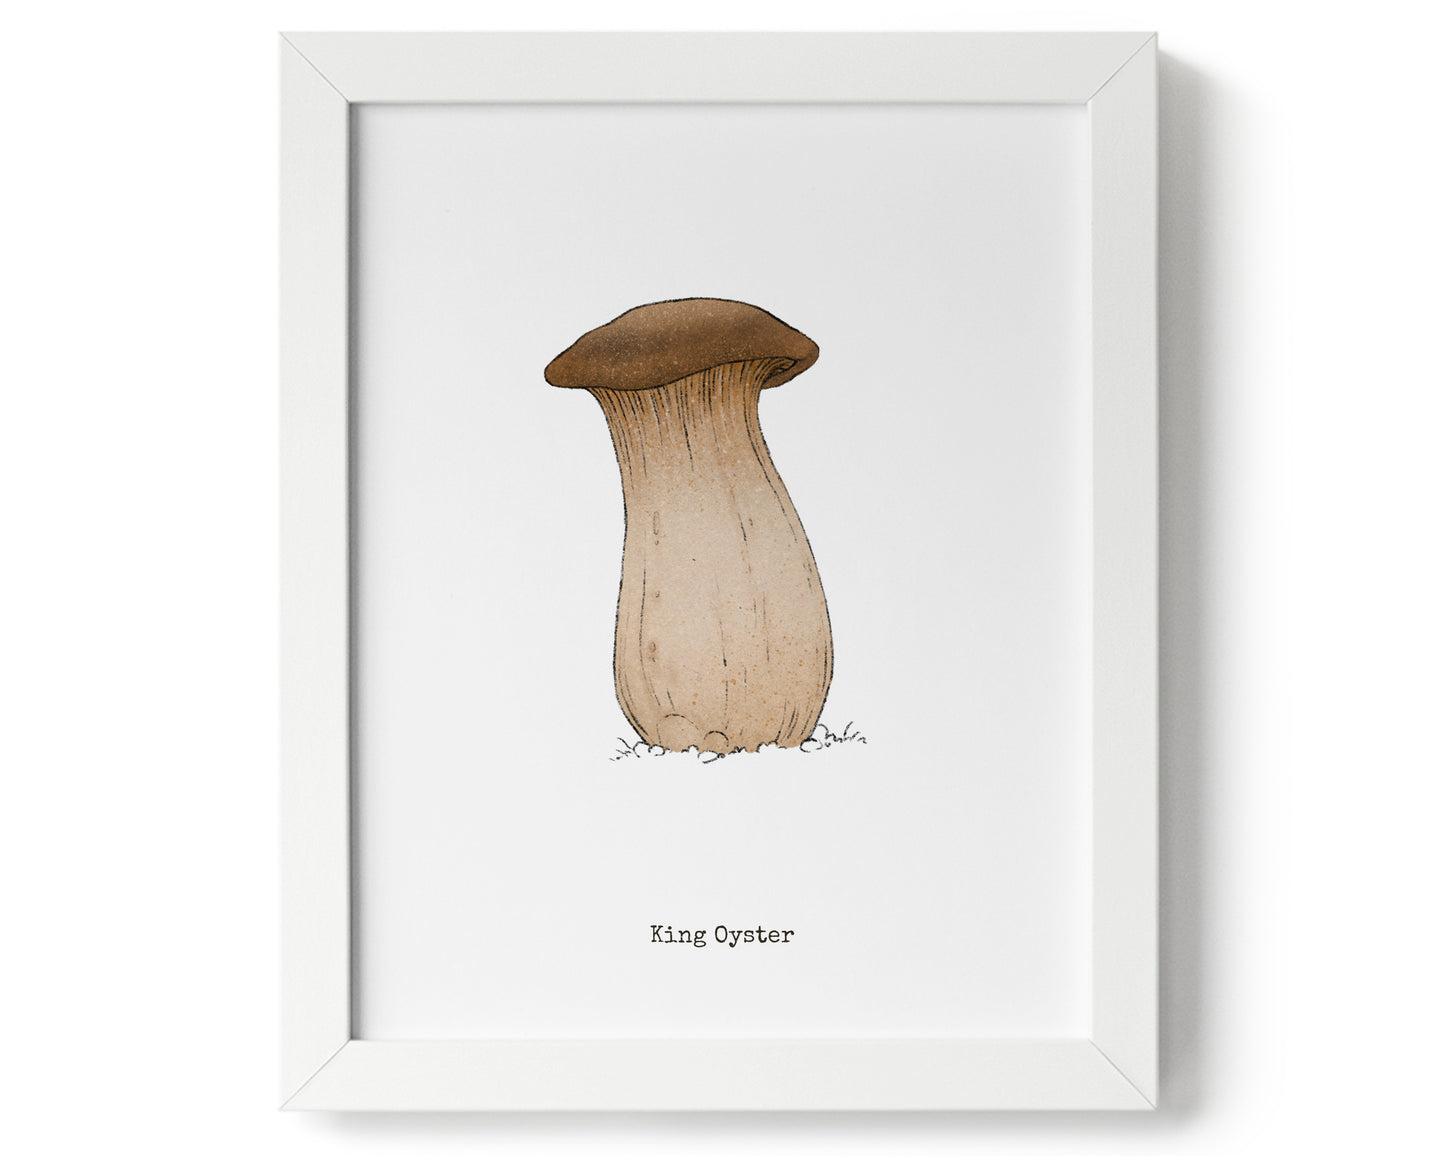 "King Oyster" by Catherine Hébert - King Oyster Mushroom Art Print - 8"x10" size